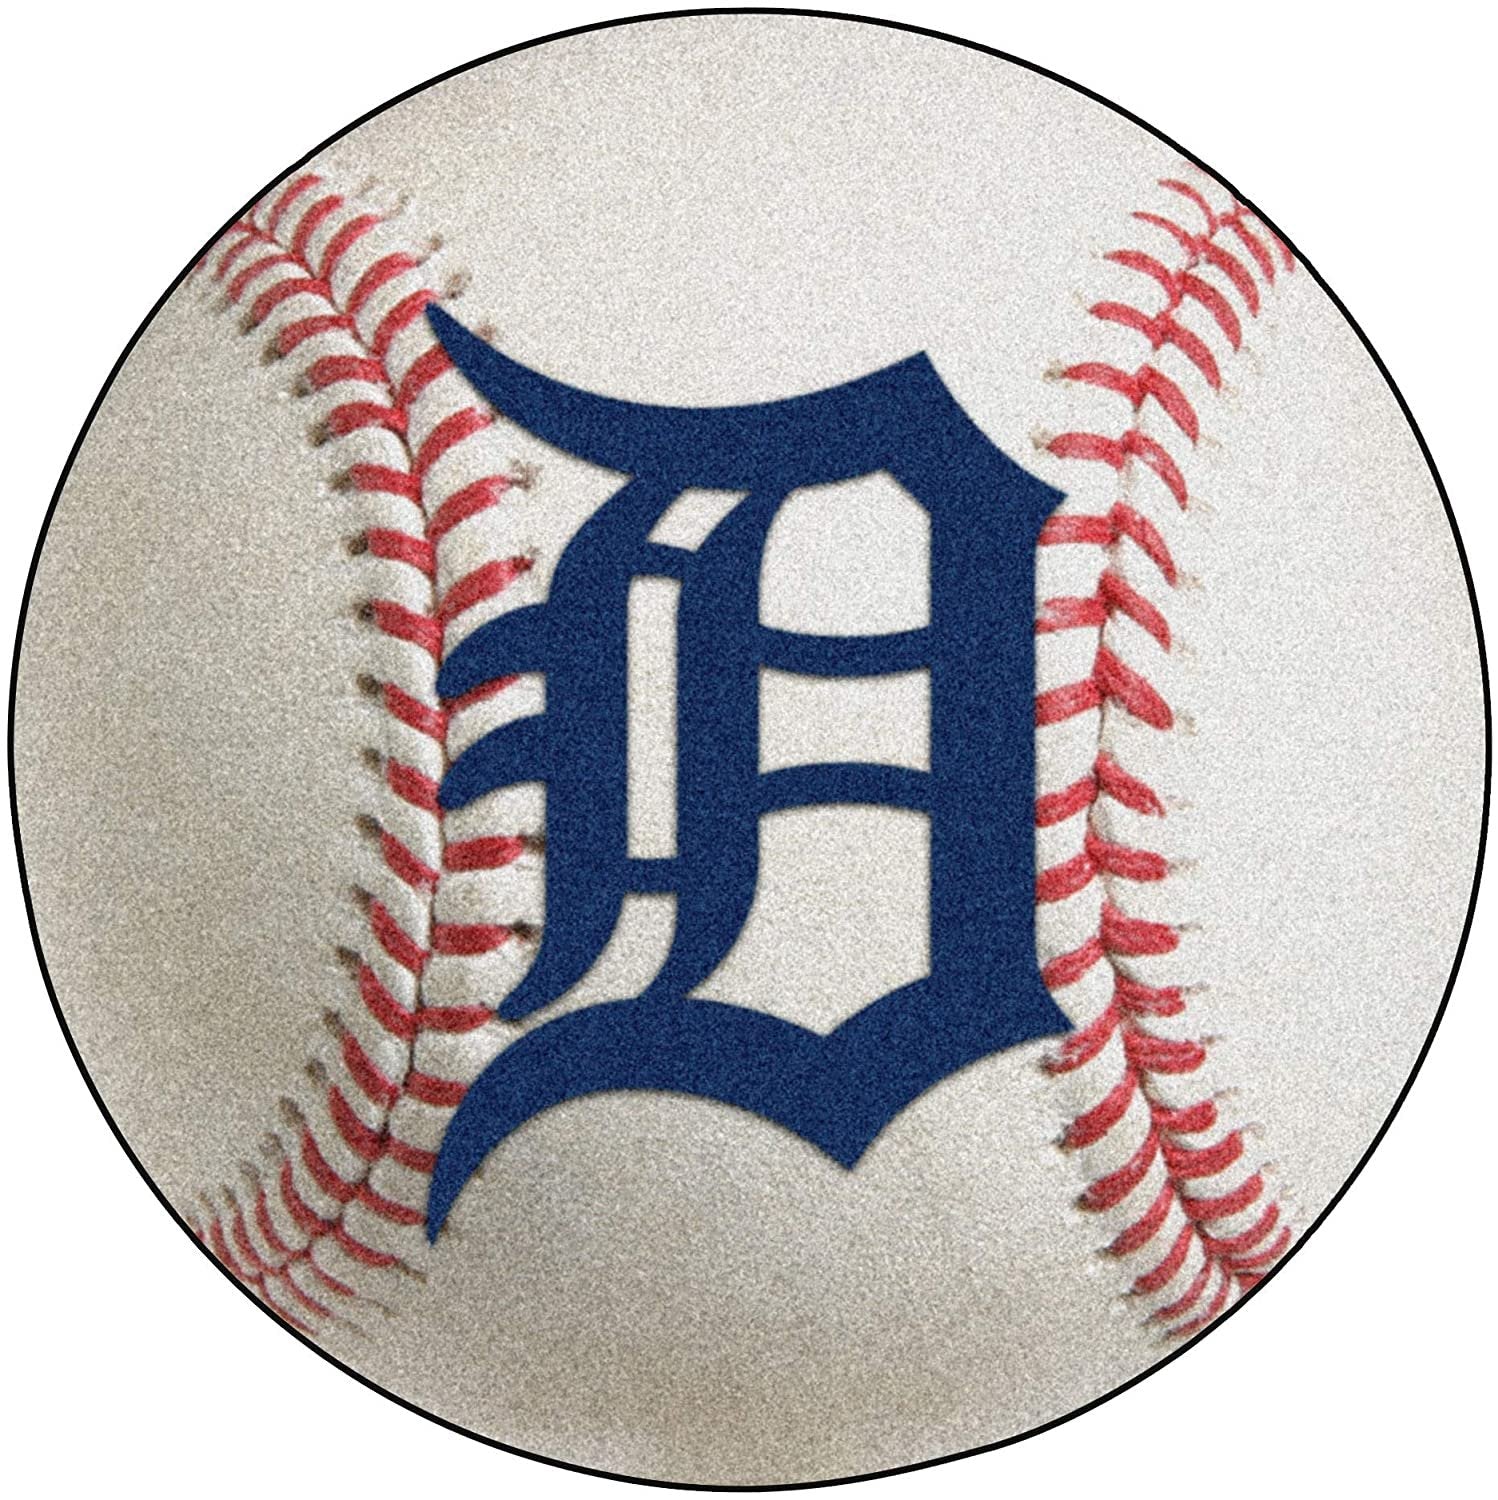 Detroit Tigers 27 Inch Area Rug Floor Mat, Nylon, Anti-Skid Backing, Baseball Shaped